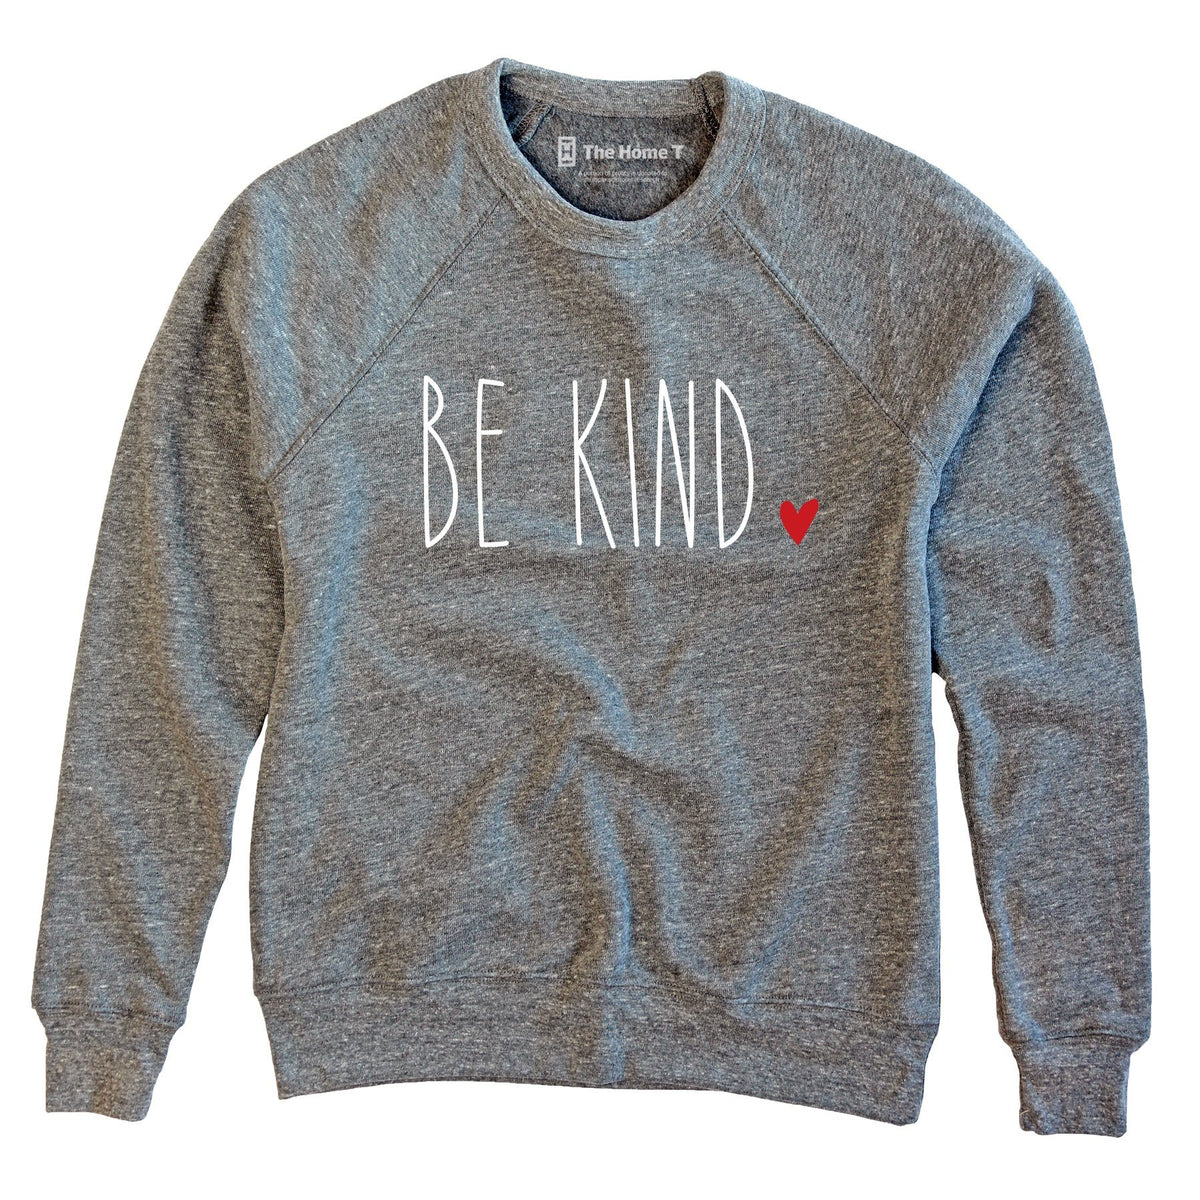 Be Kind Heart Sweatshirt